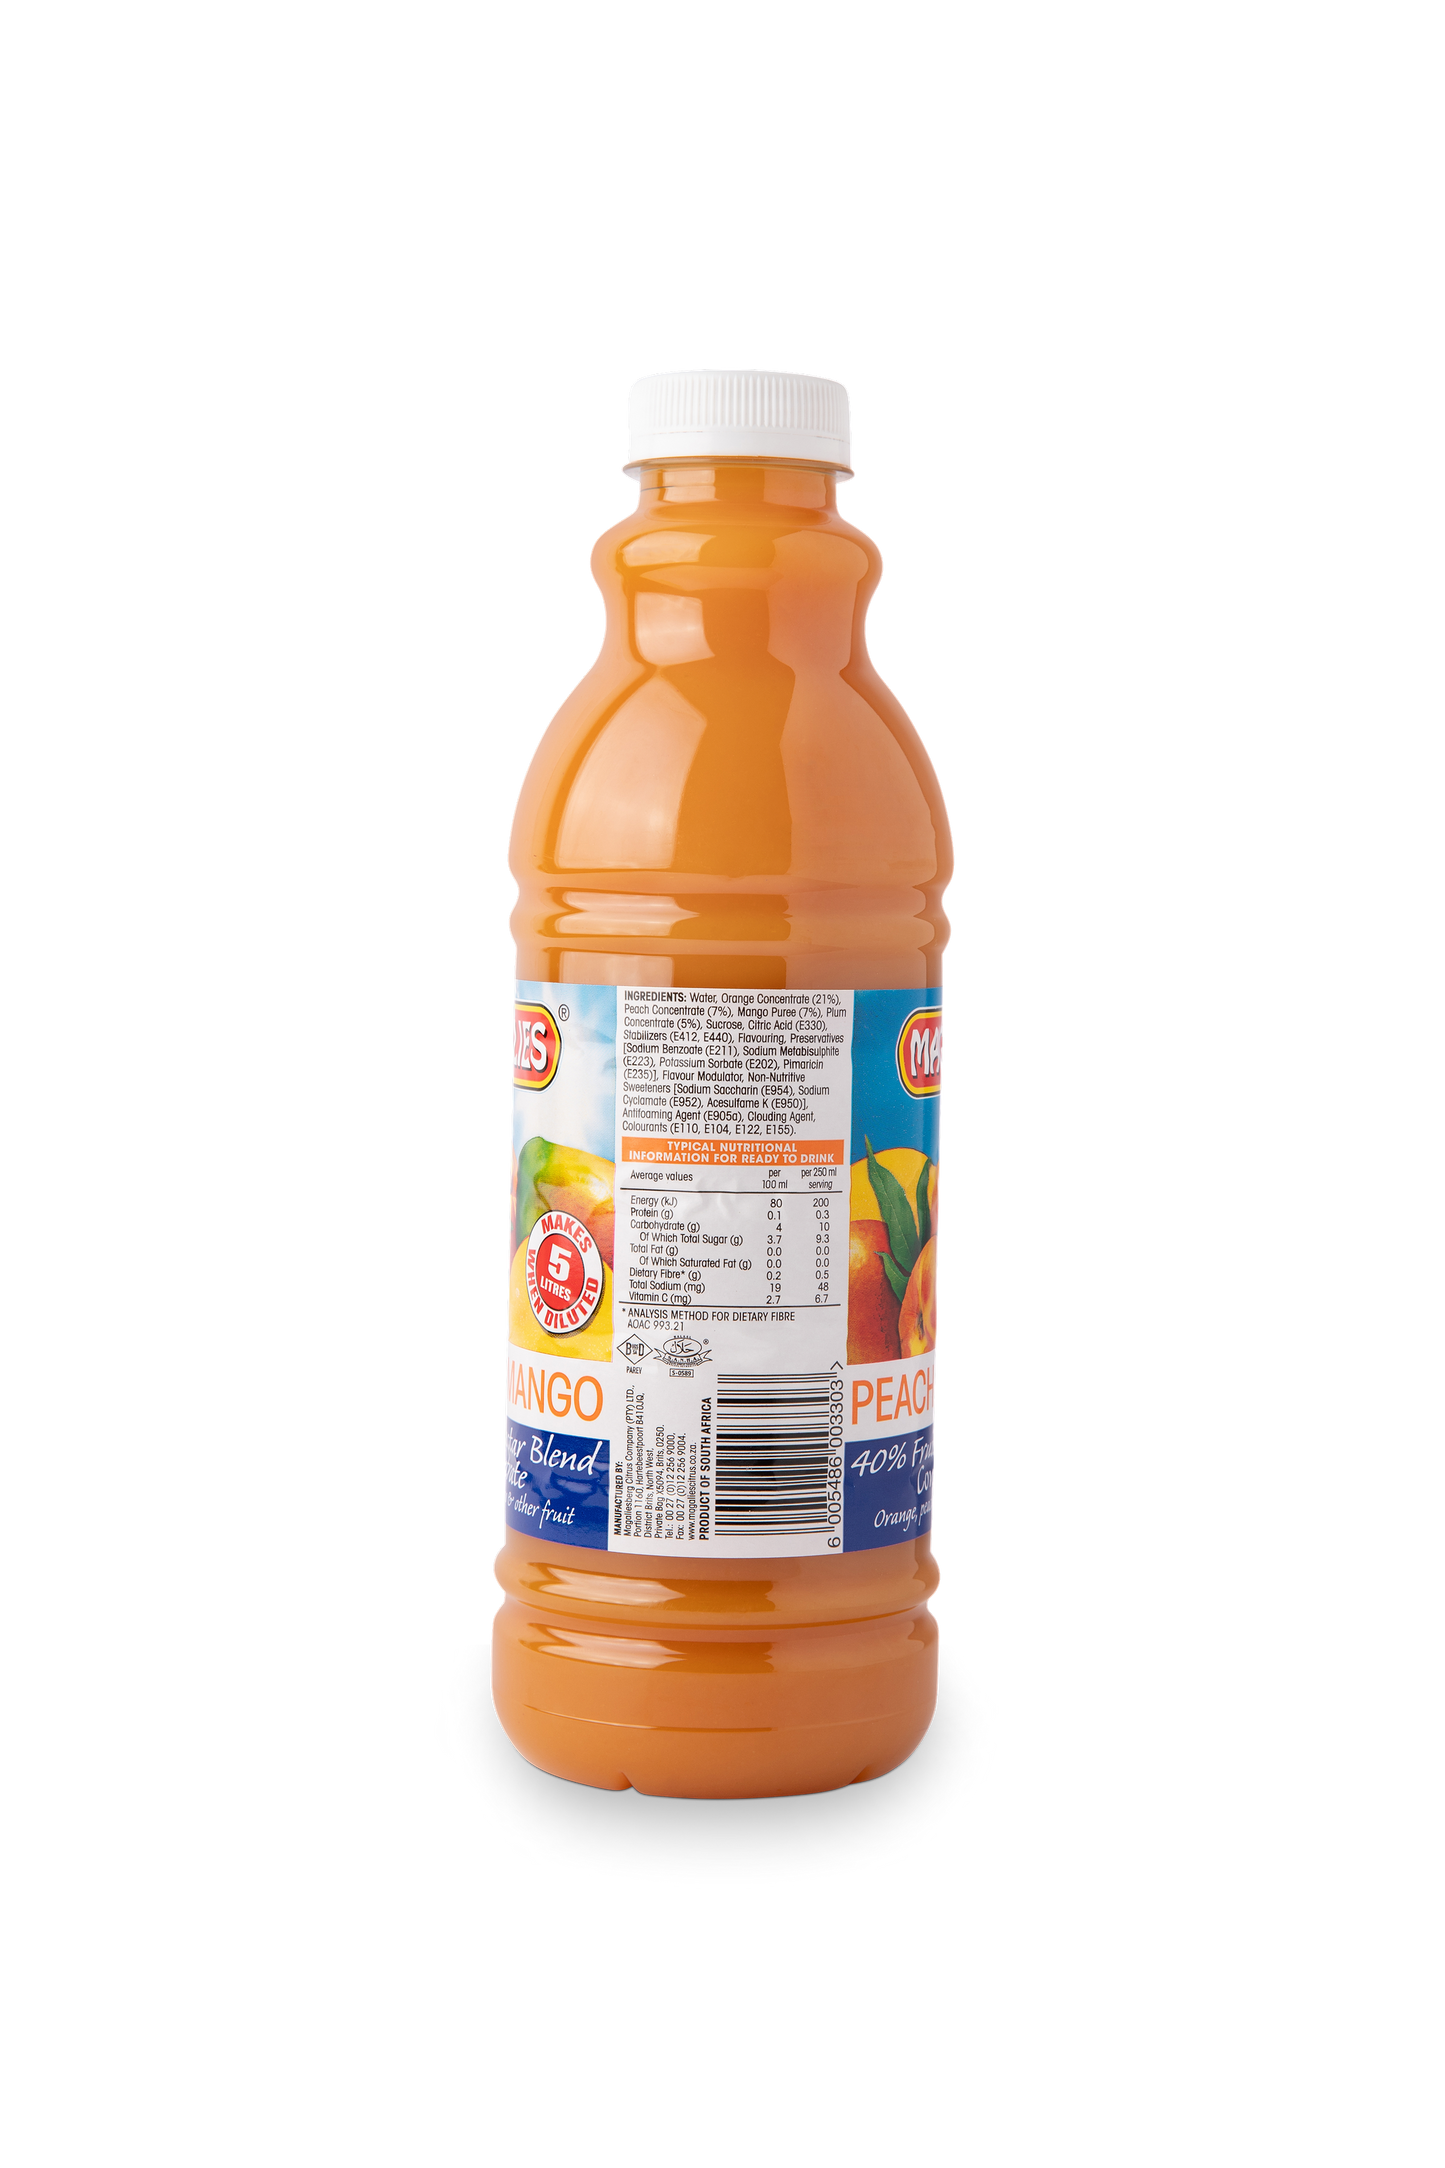 Magalies 1 litre Peach & Mango 40% 1+4 fruit nectar concentrate